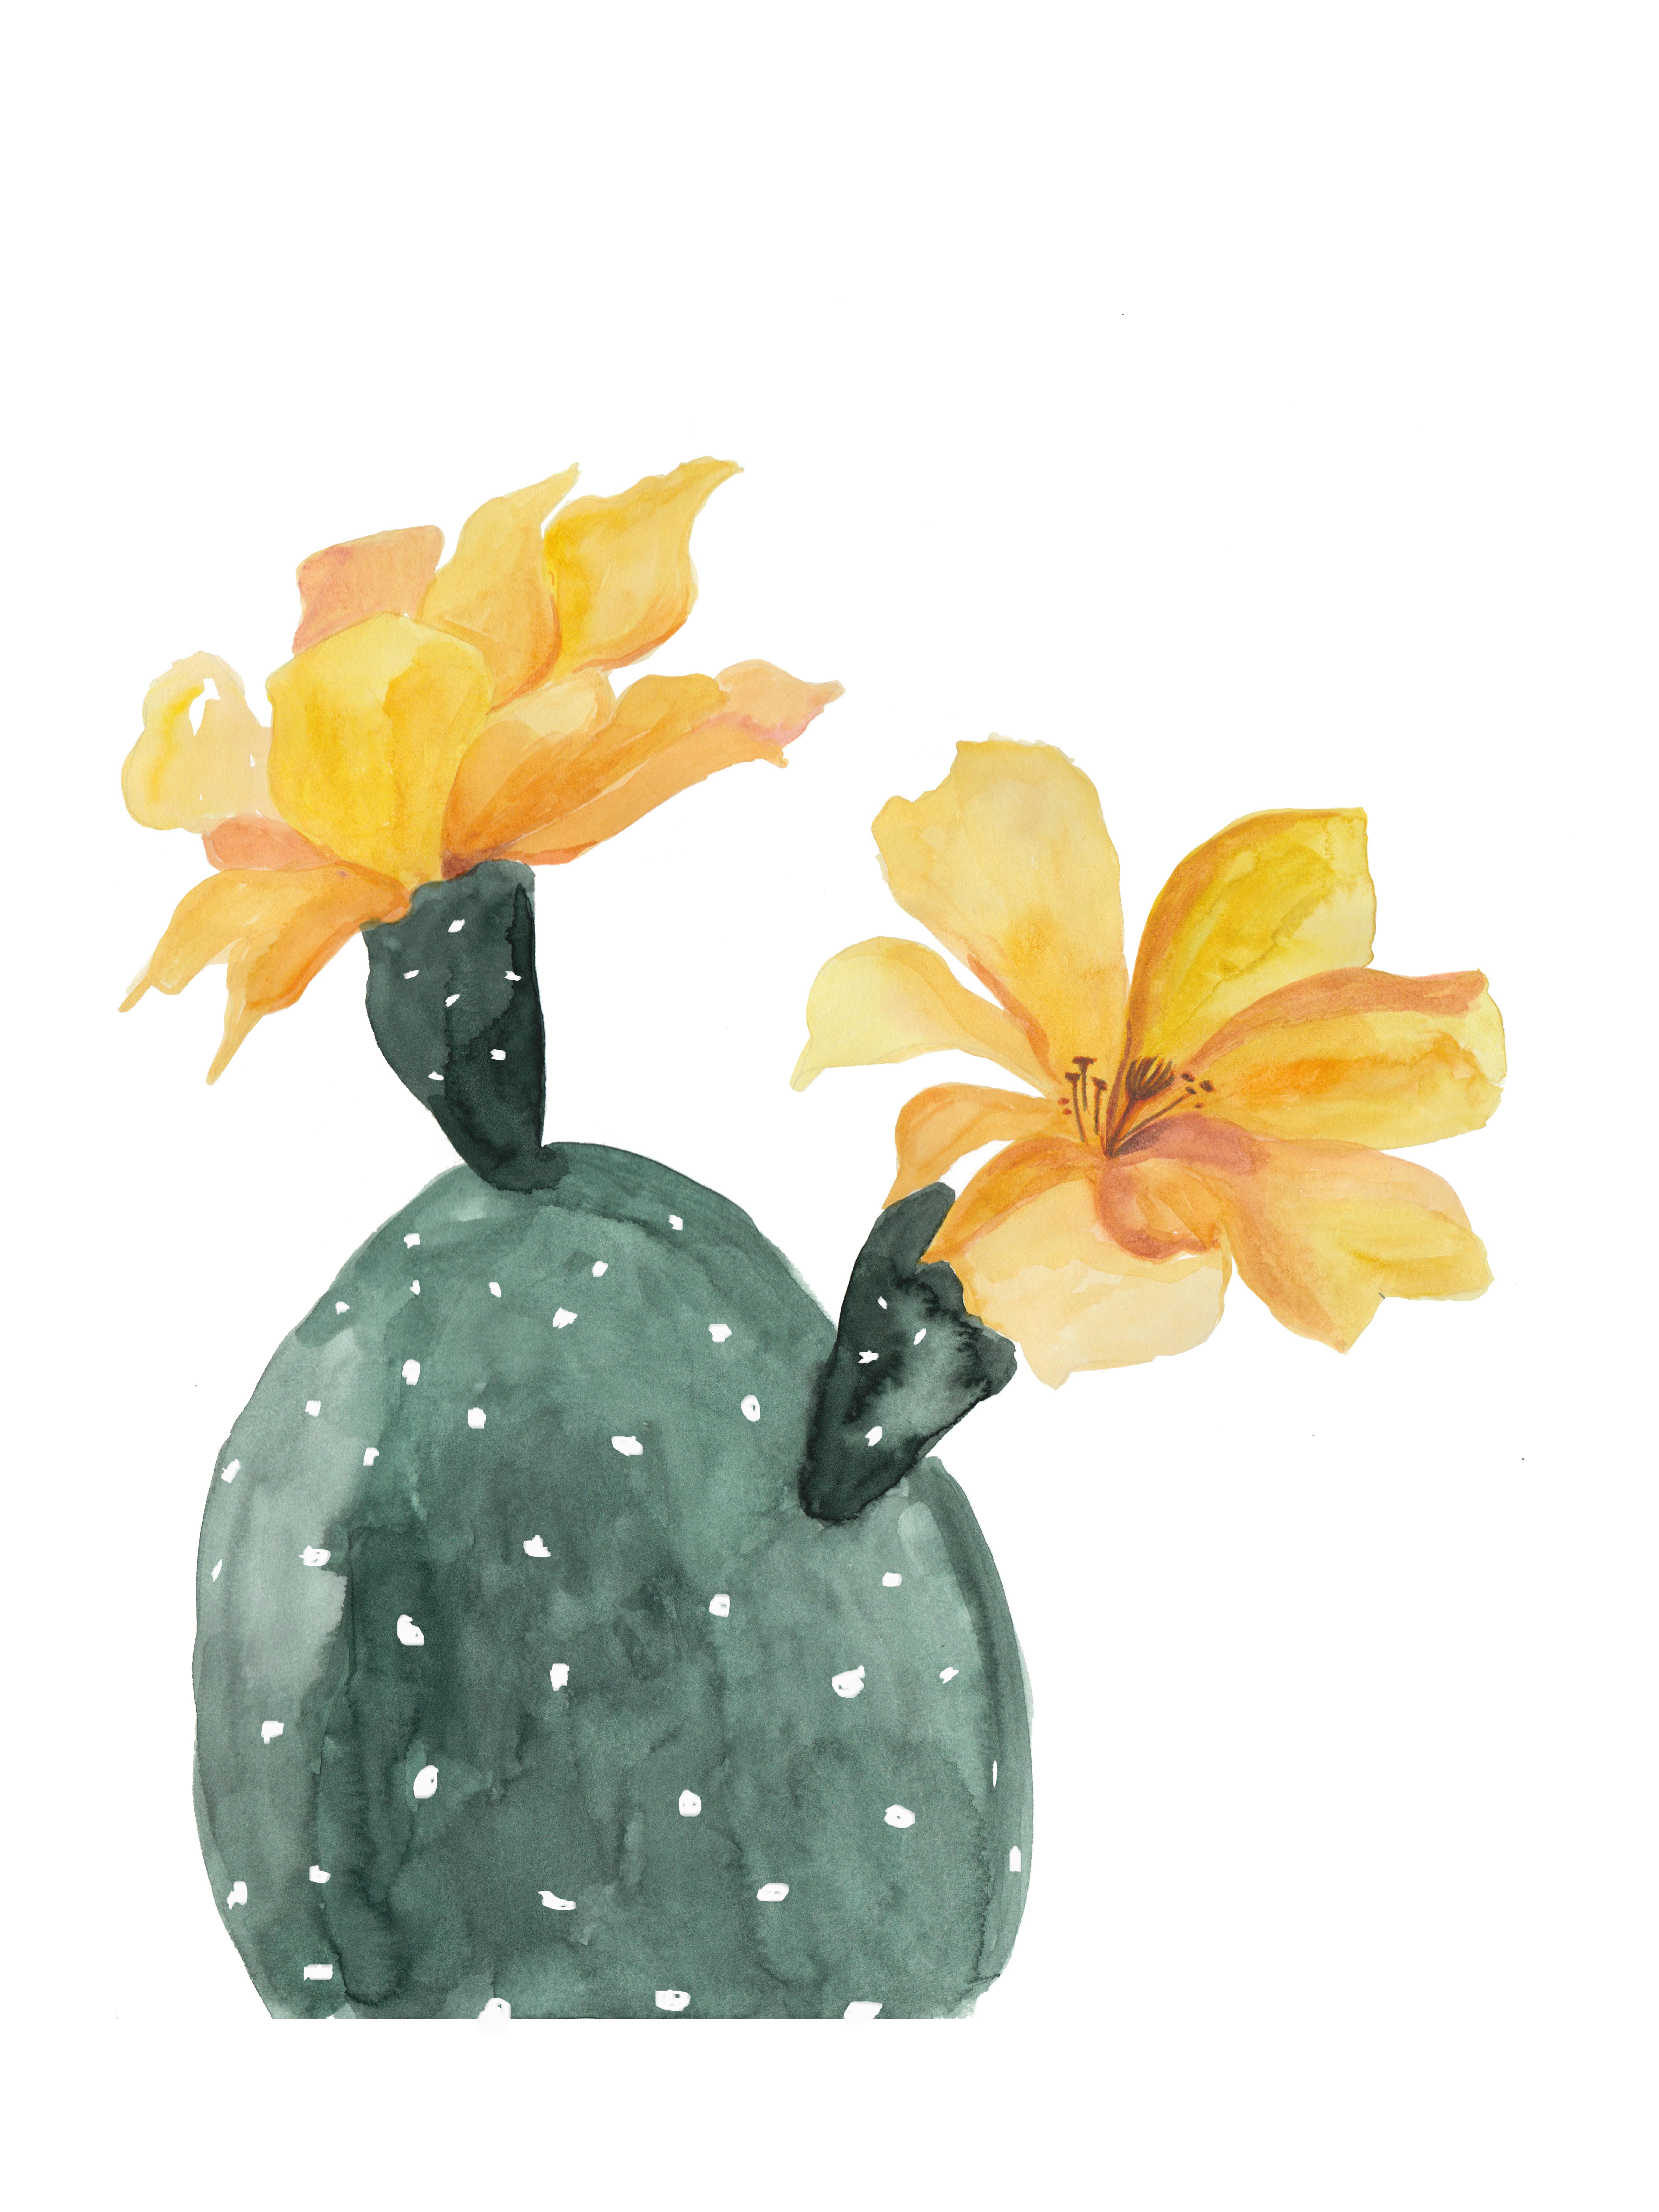 794-botanical-illustration---yellow-cactus-flowers.jpg